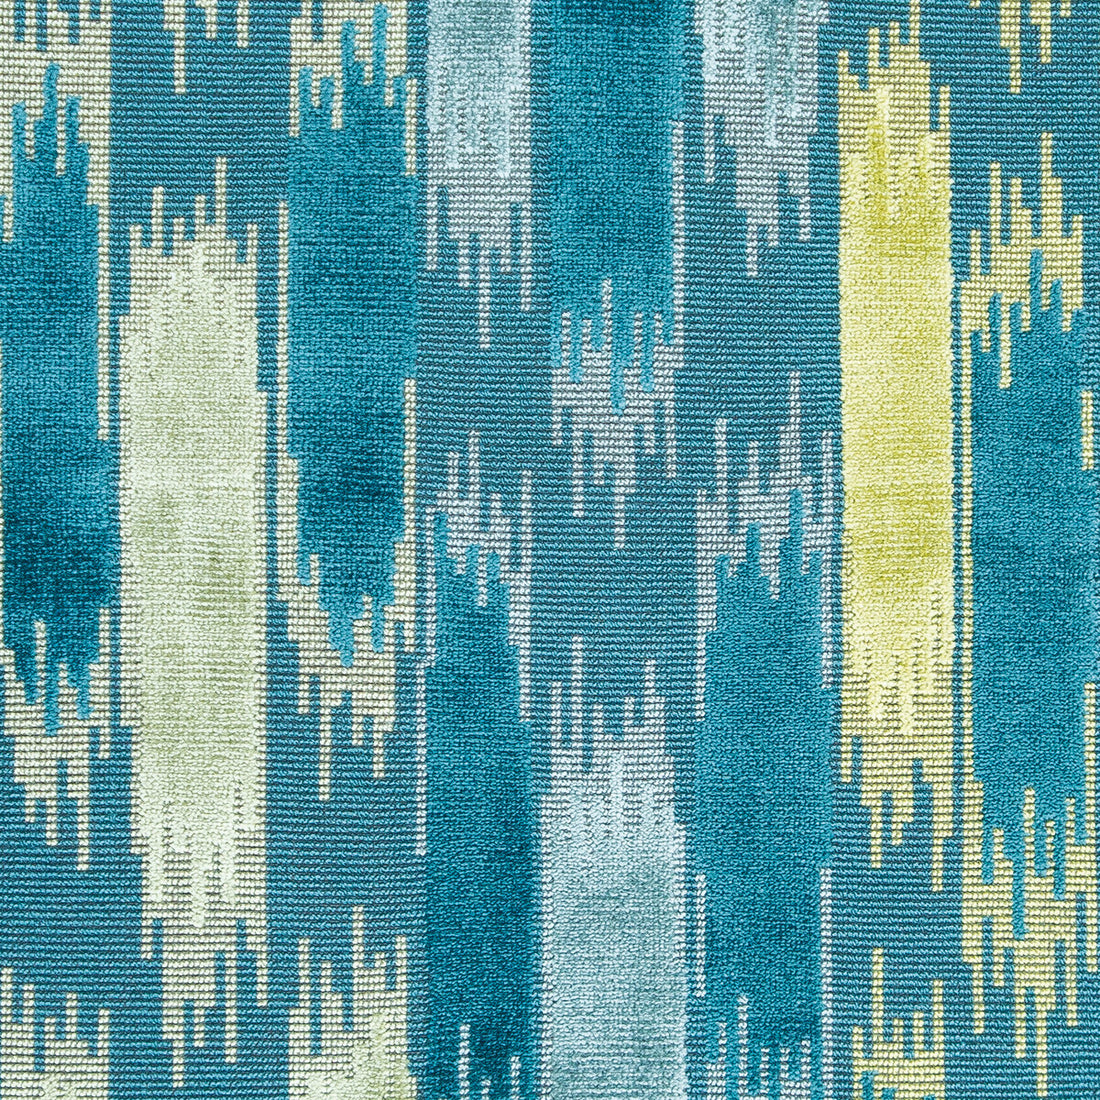 Aragon fabric in oceano/lima color - pattern GDT5566.003.0 - by Gaston y Daniela in the Gaston Nuevo Mundo collection